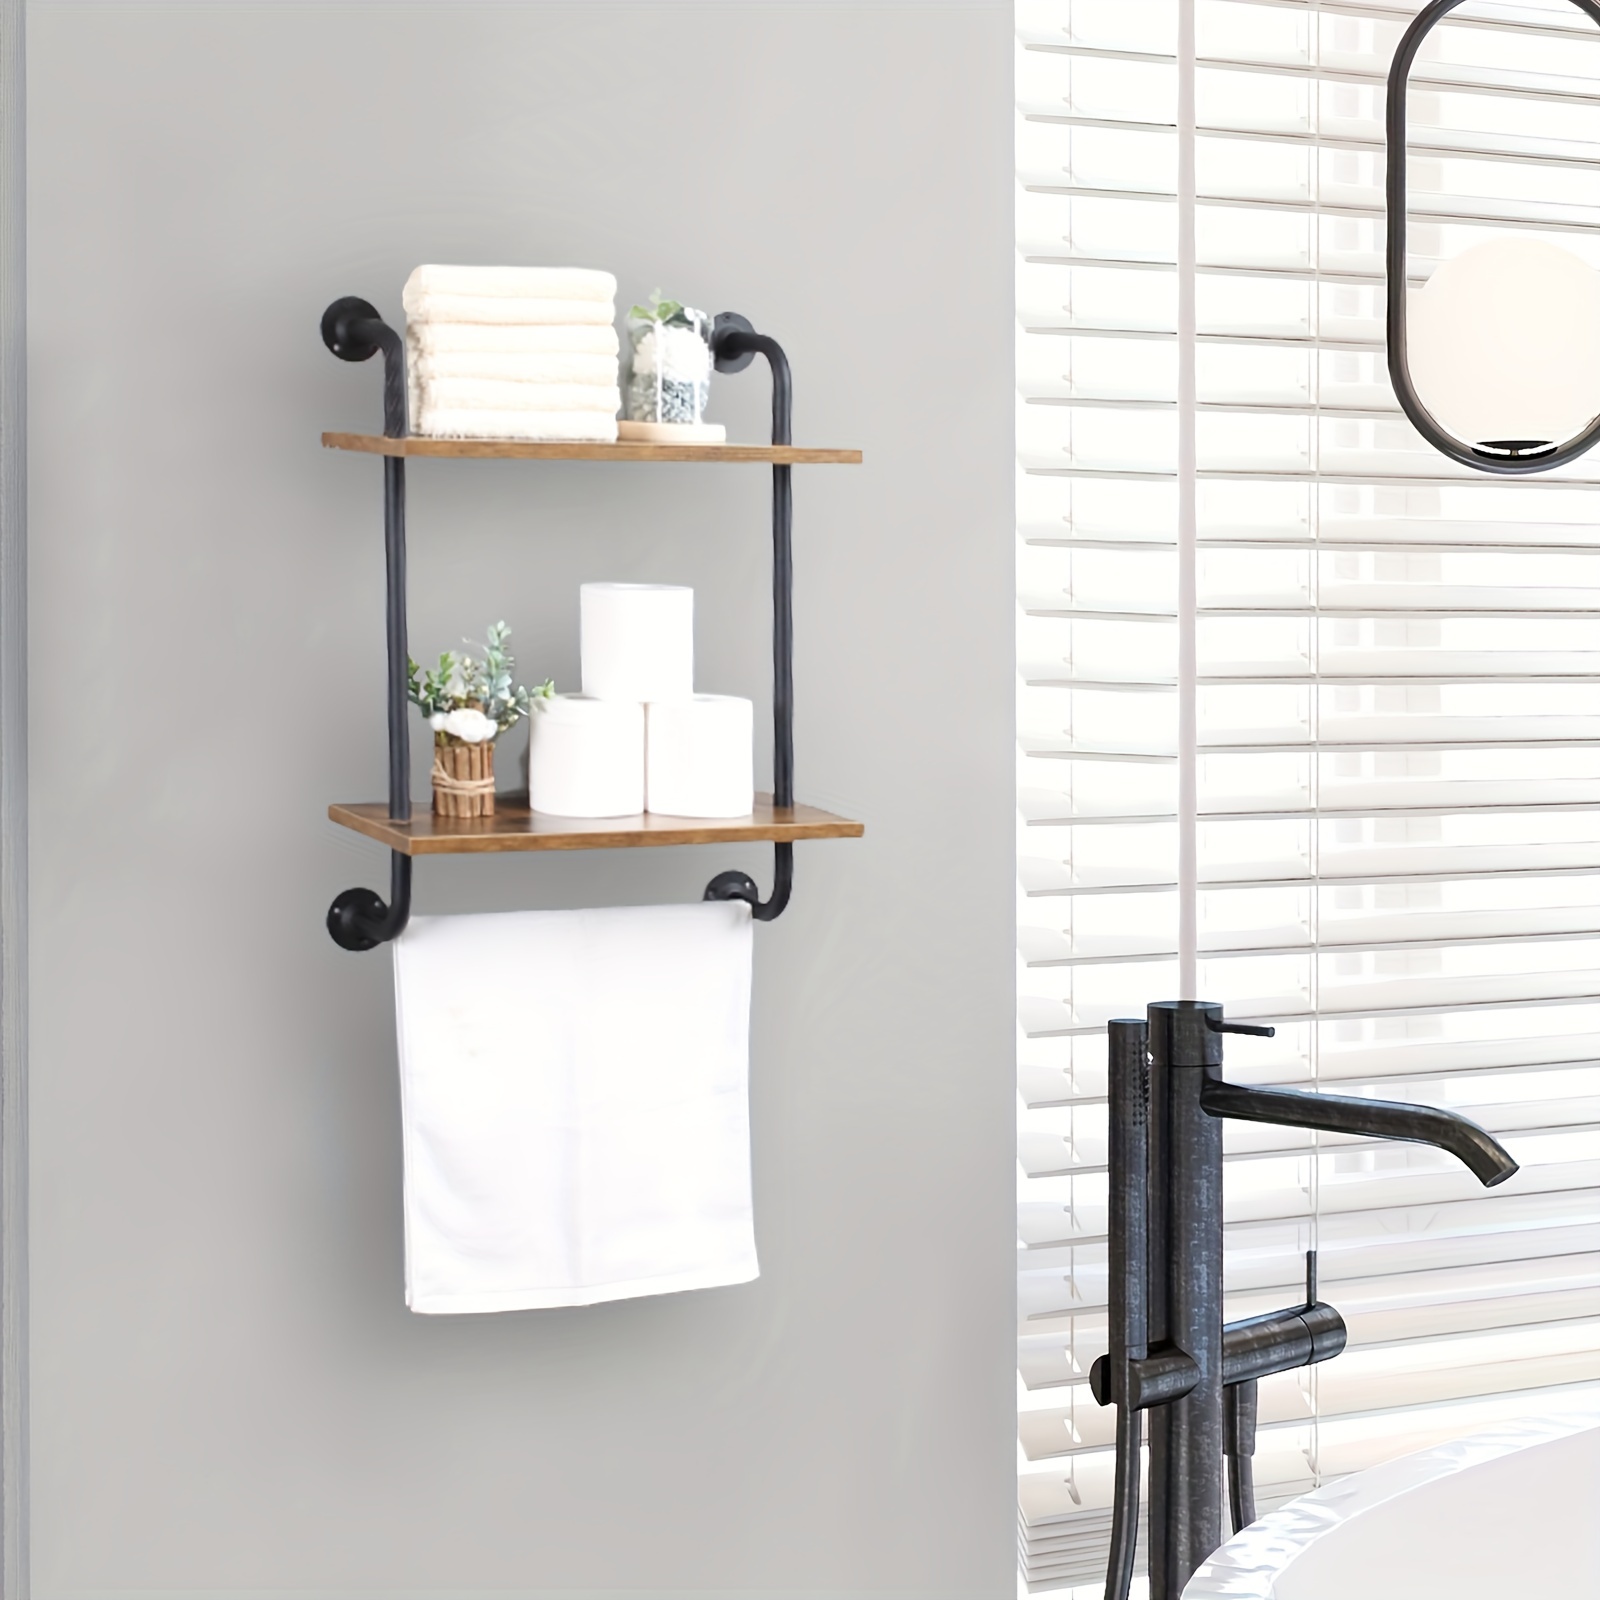 2-Tier Rustic Bathroom Shelves with Towel Bar Wall Mounted Wood